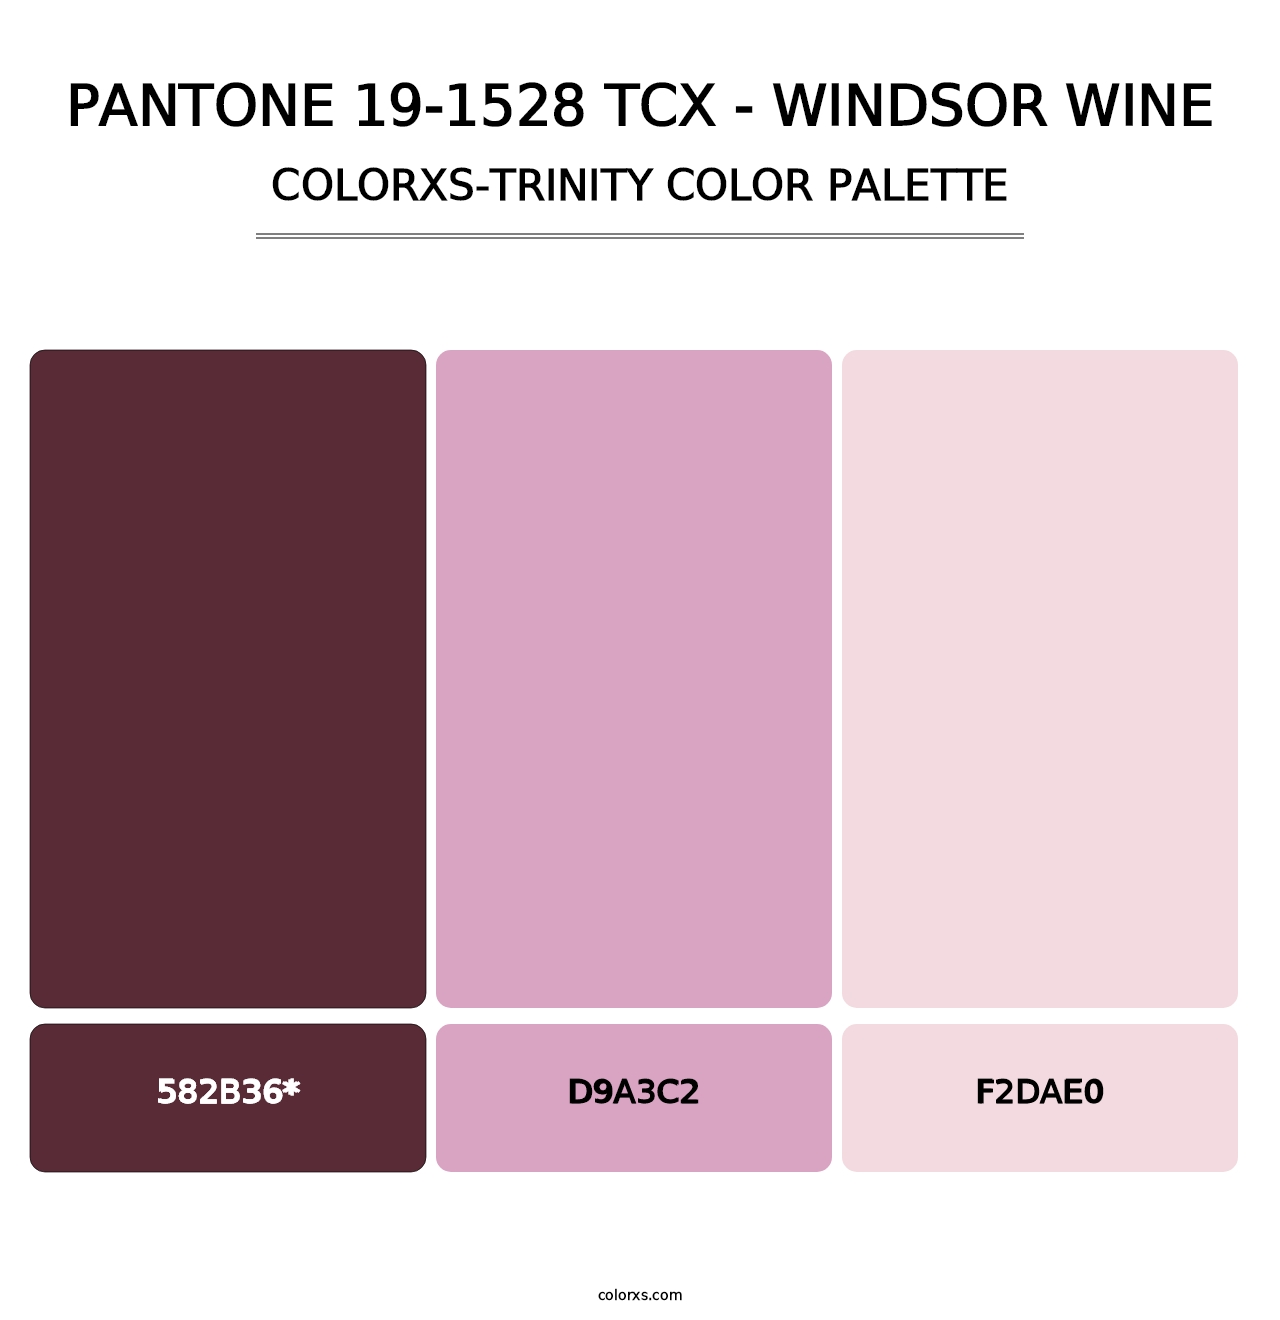 PANTONE 19-1528 TCX - Windsor Wine - Colorxs Trinity Palette